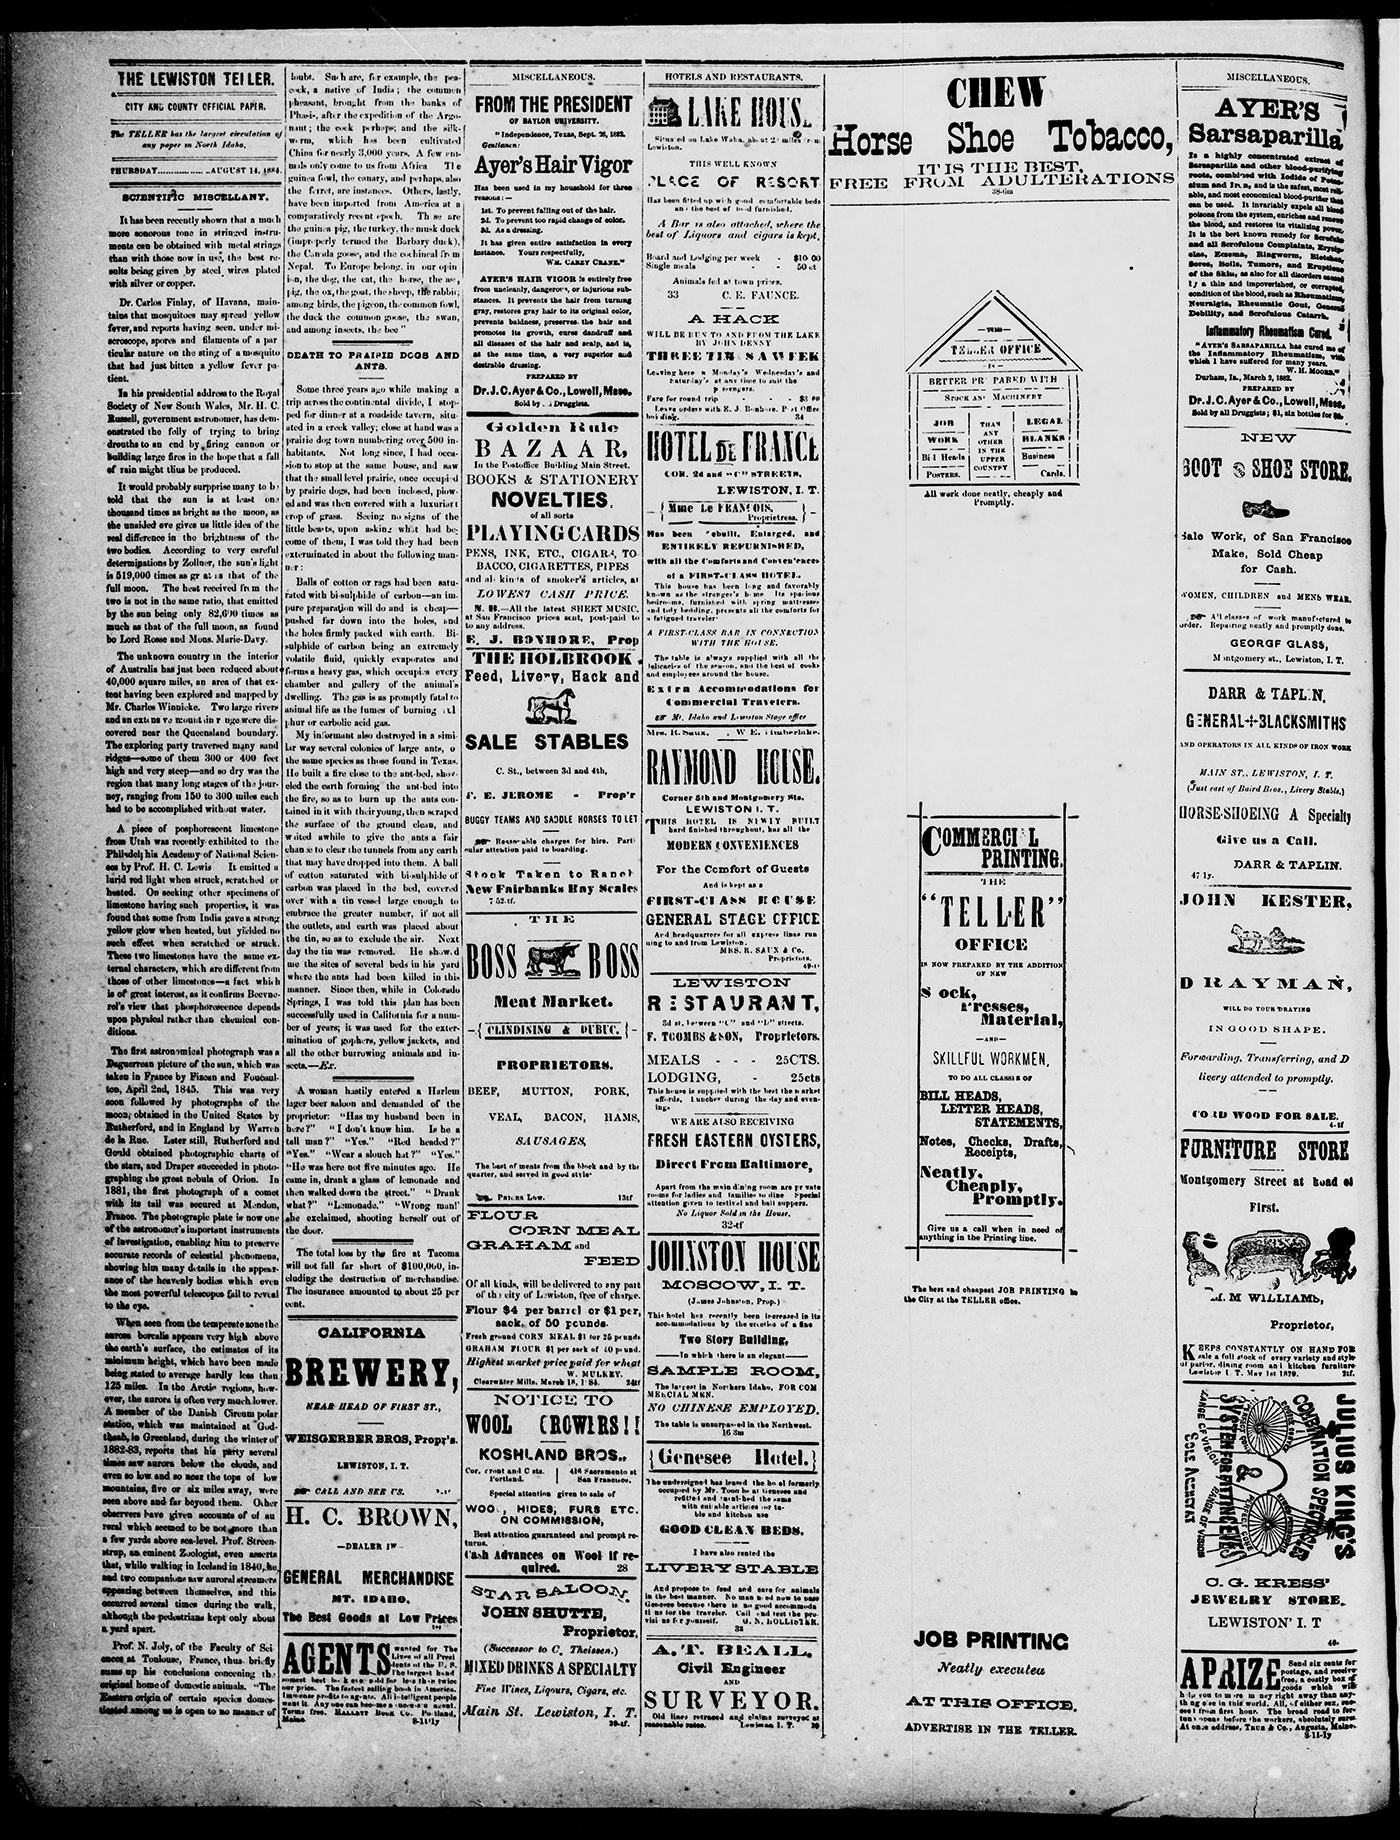 December 18, 1915, Washington Star